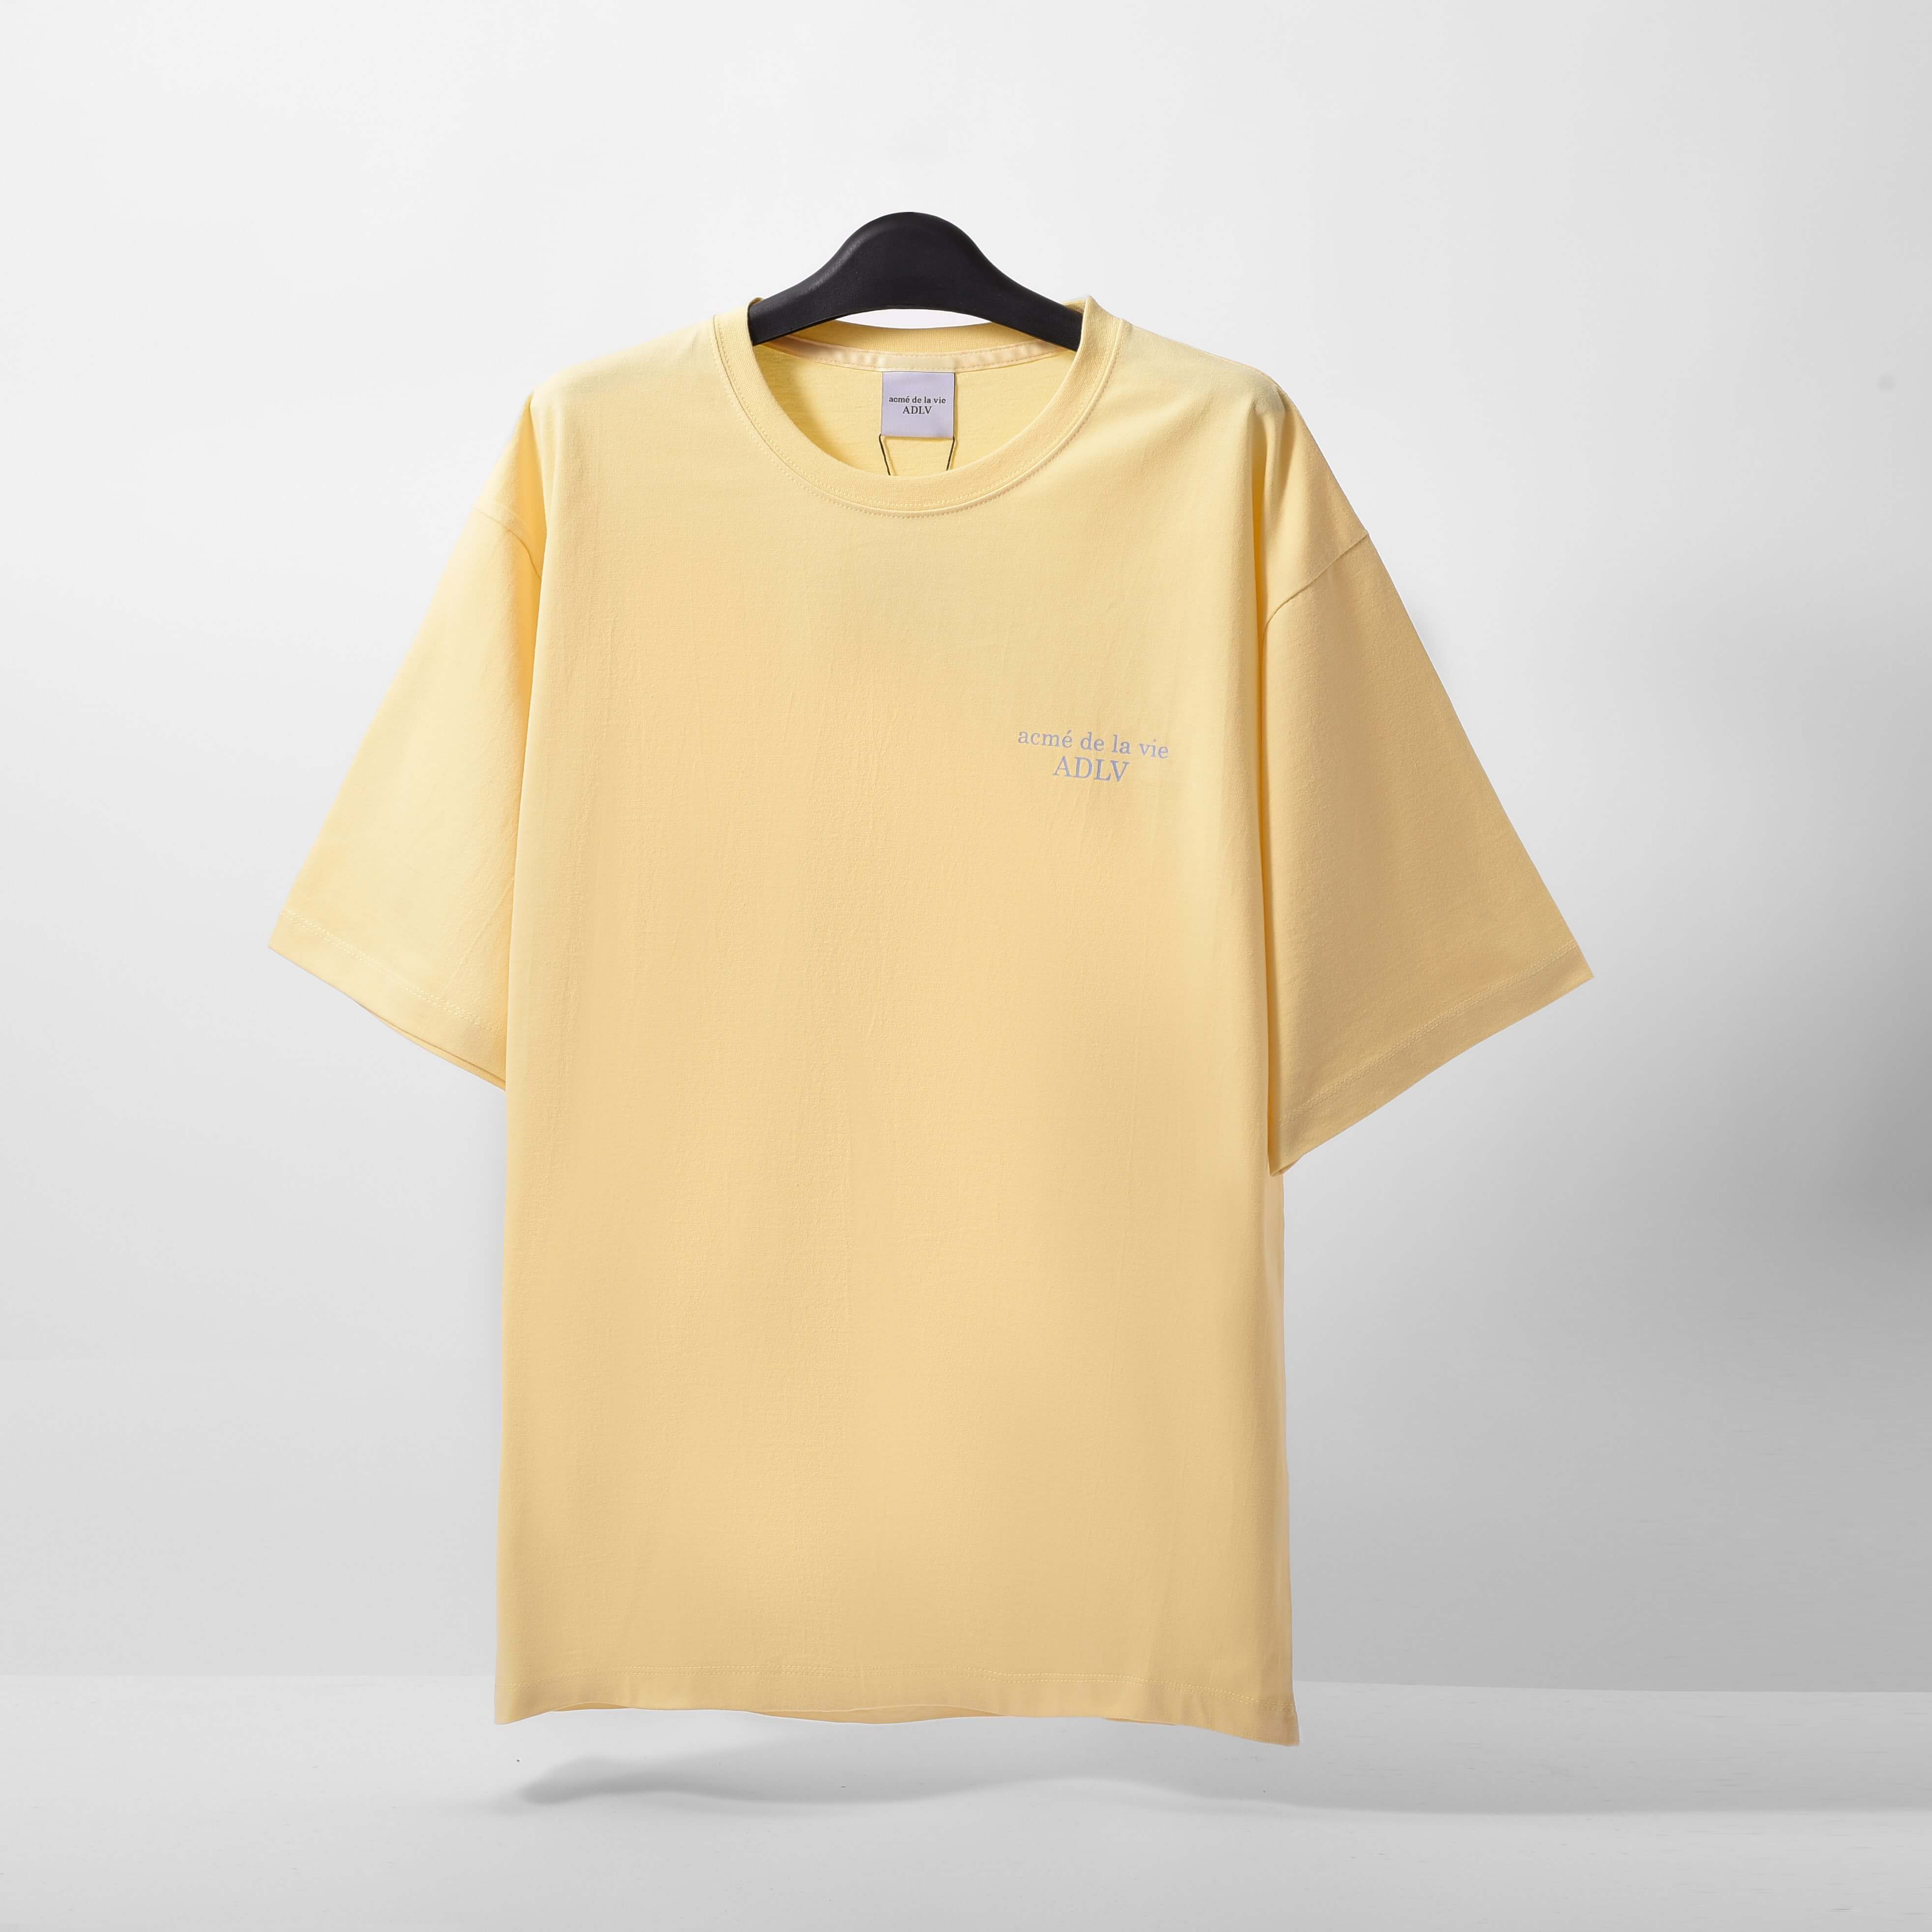 ADLV Basic Tshirt - Yellow